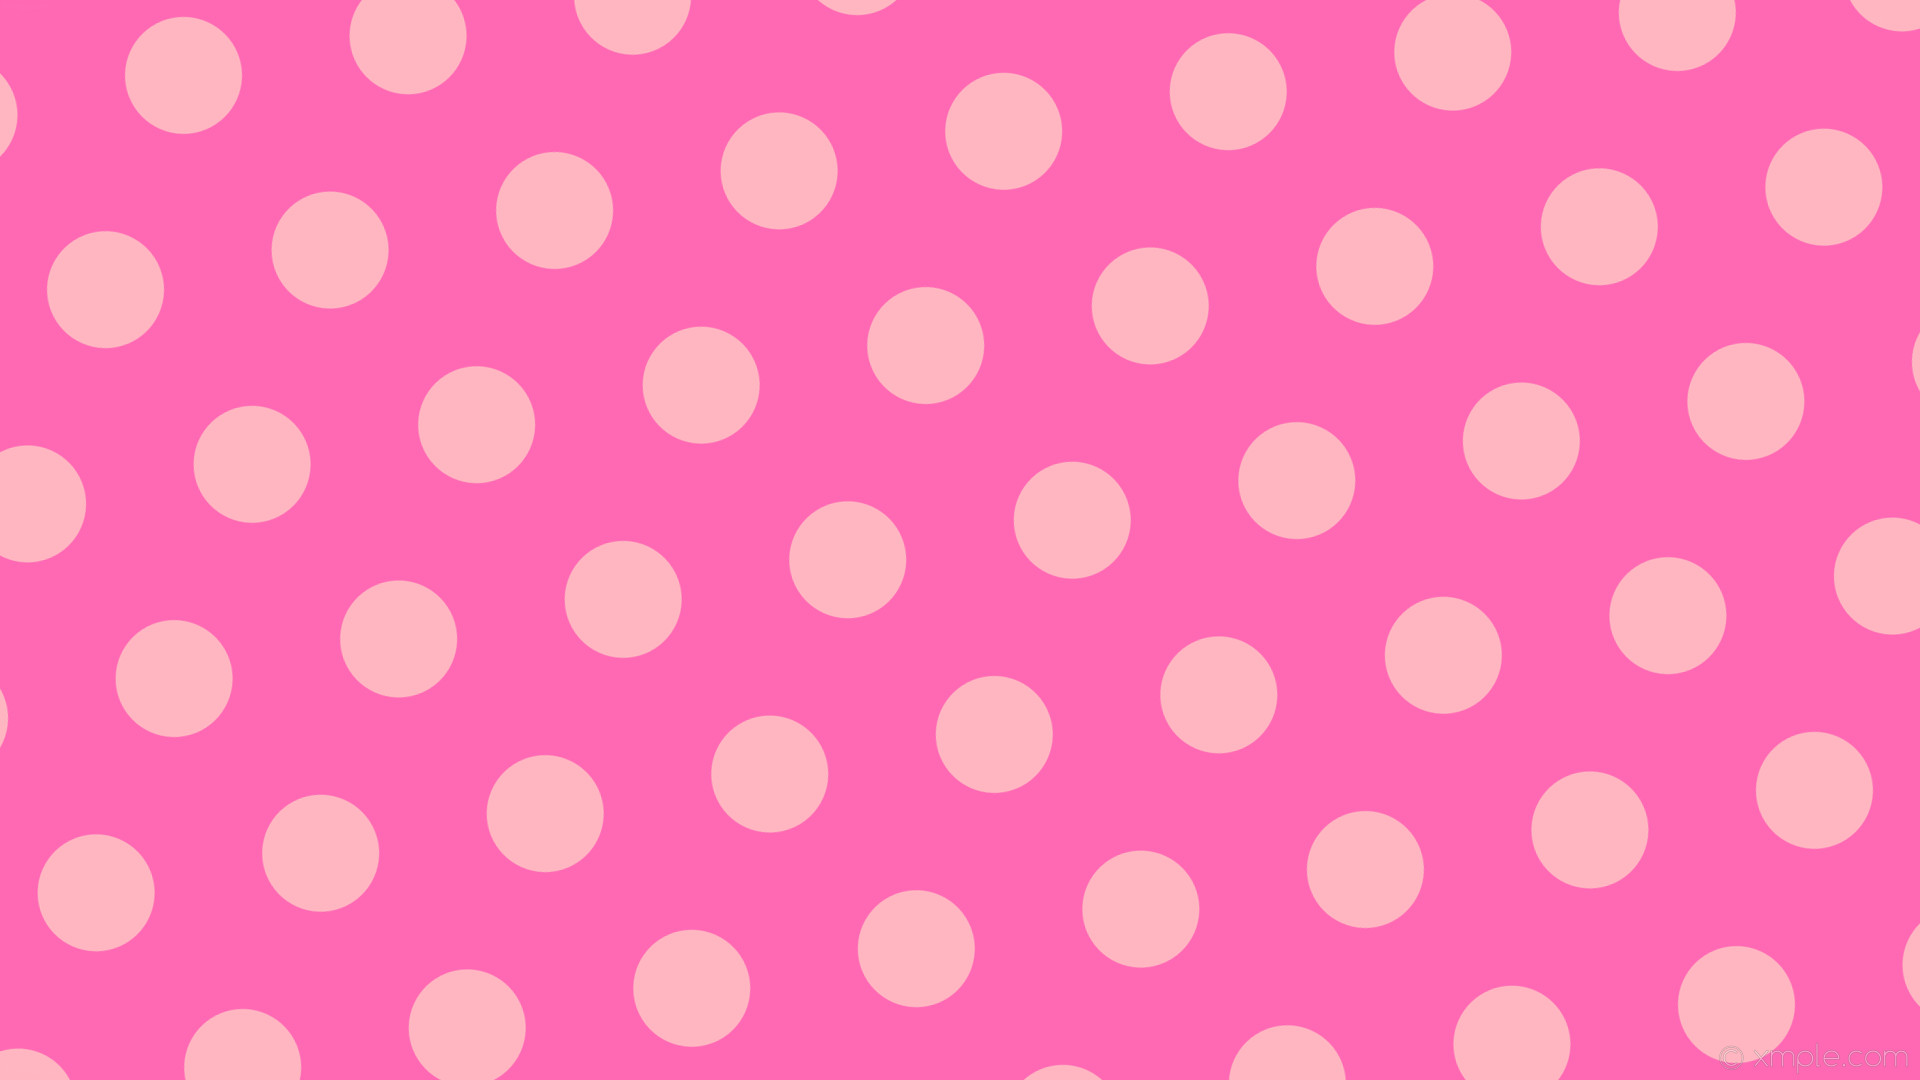 1920x1080 wallpaper pink hexagon polka dots hot pink light pink #ff69b4 #ffb6c1  diagonal 10Â°